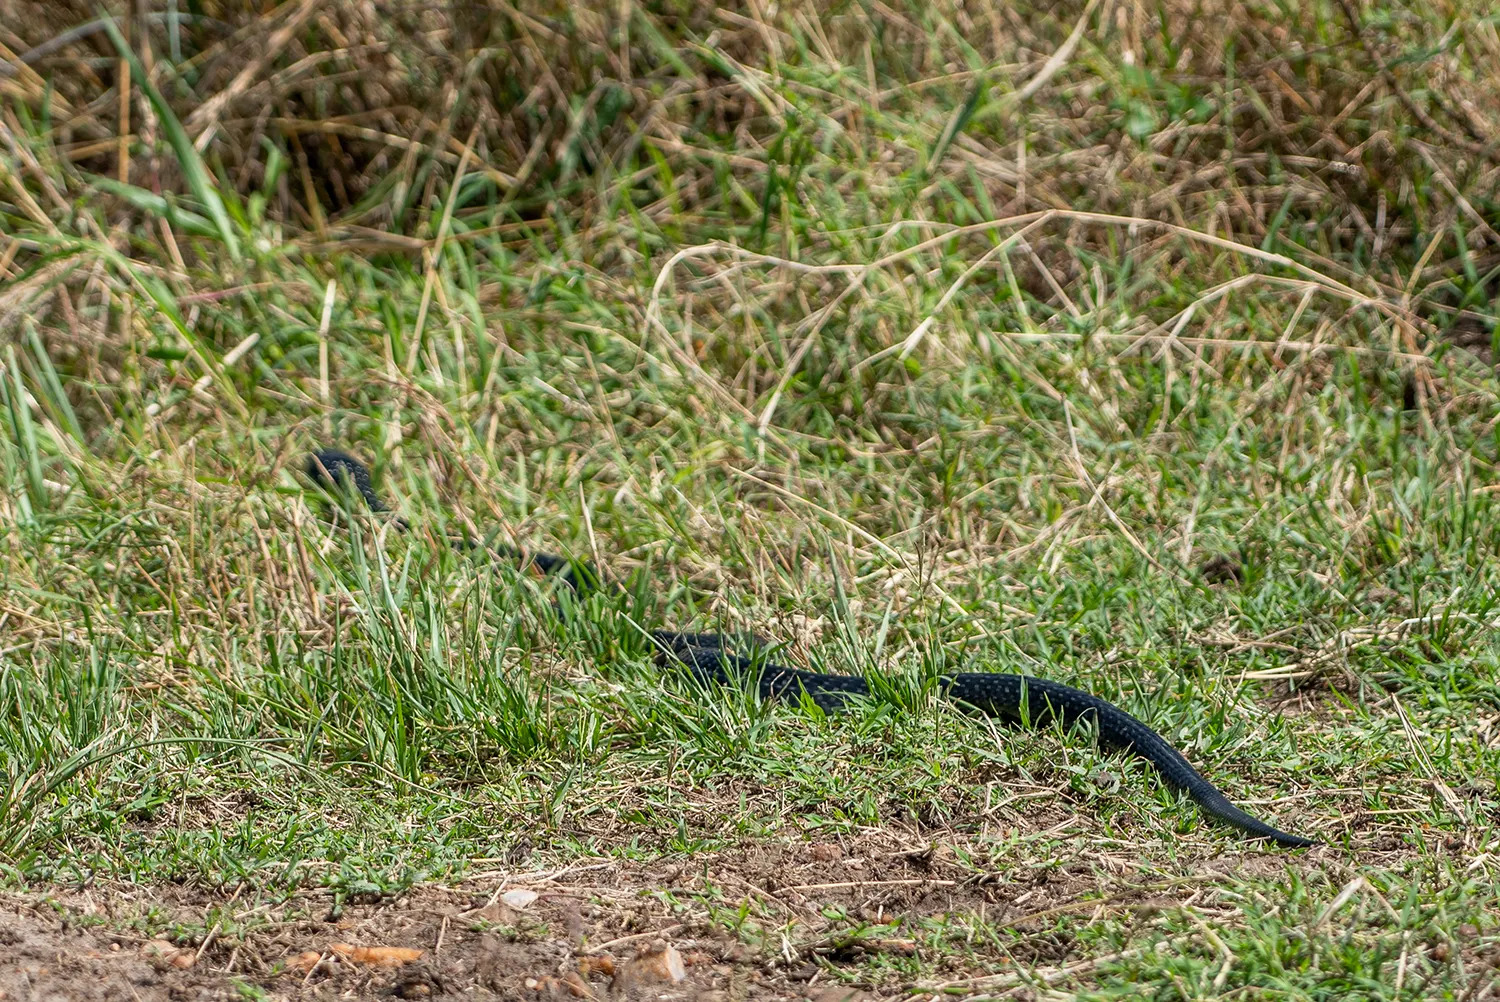 Black necked spitting cobra